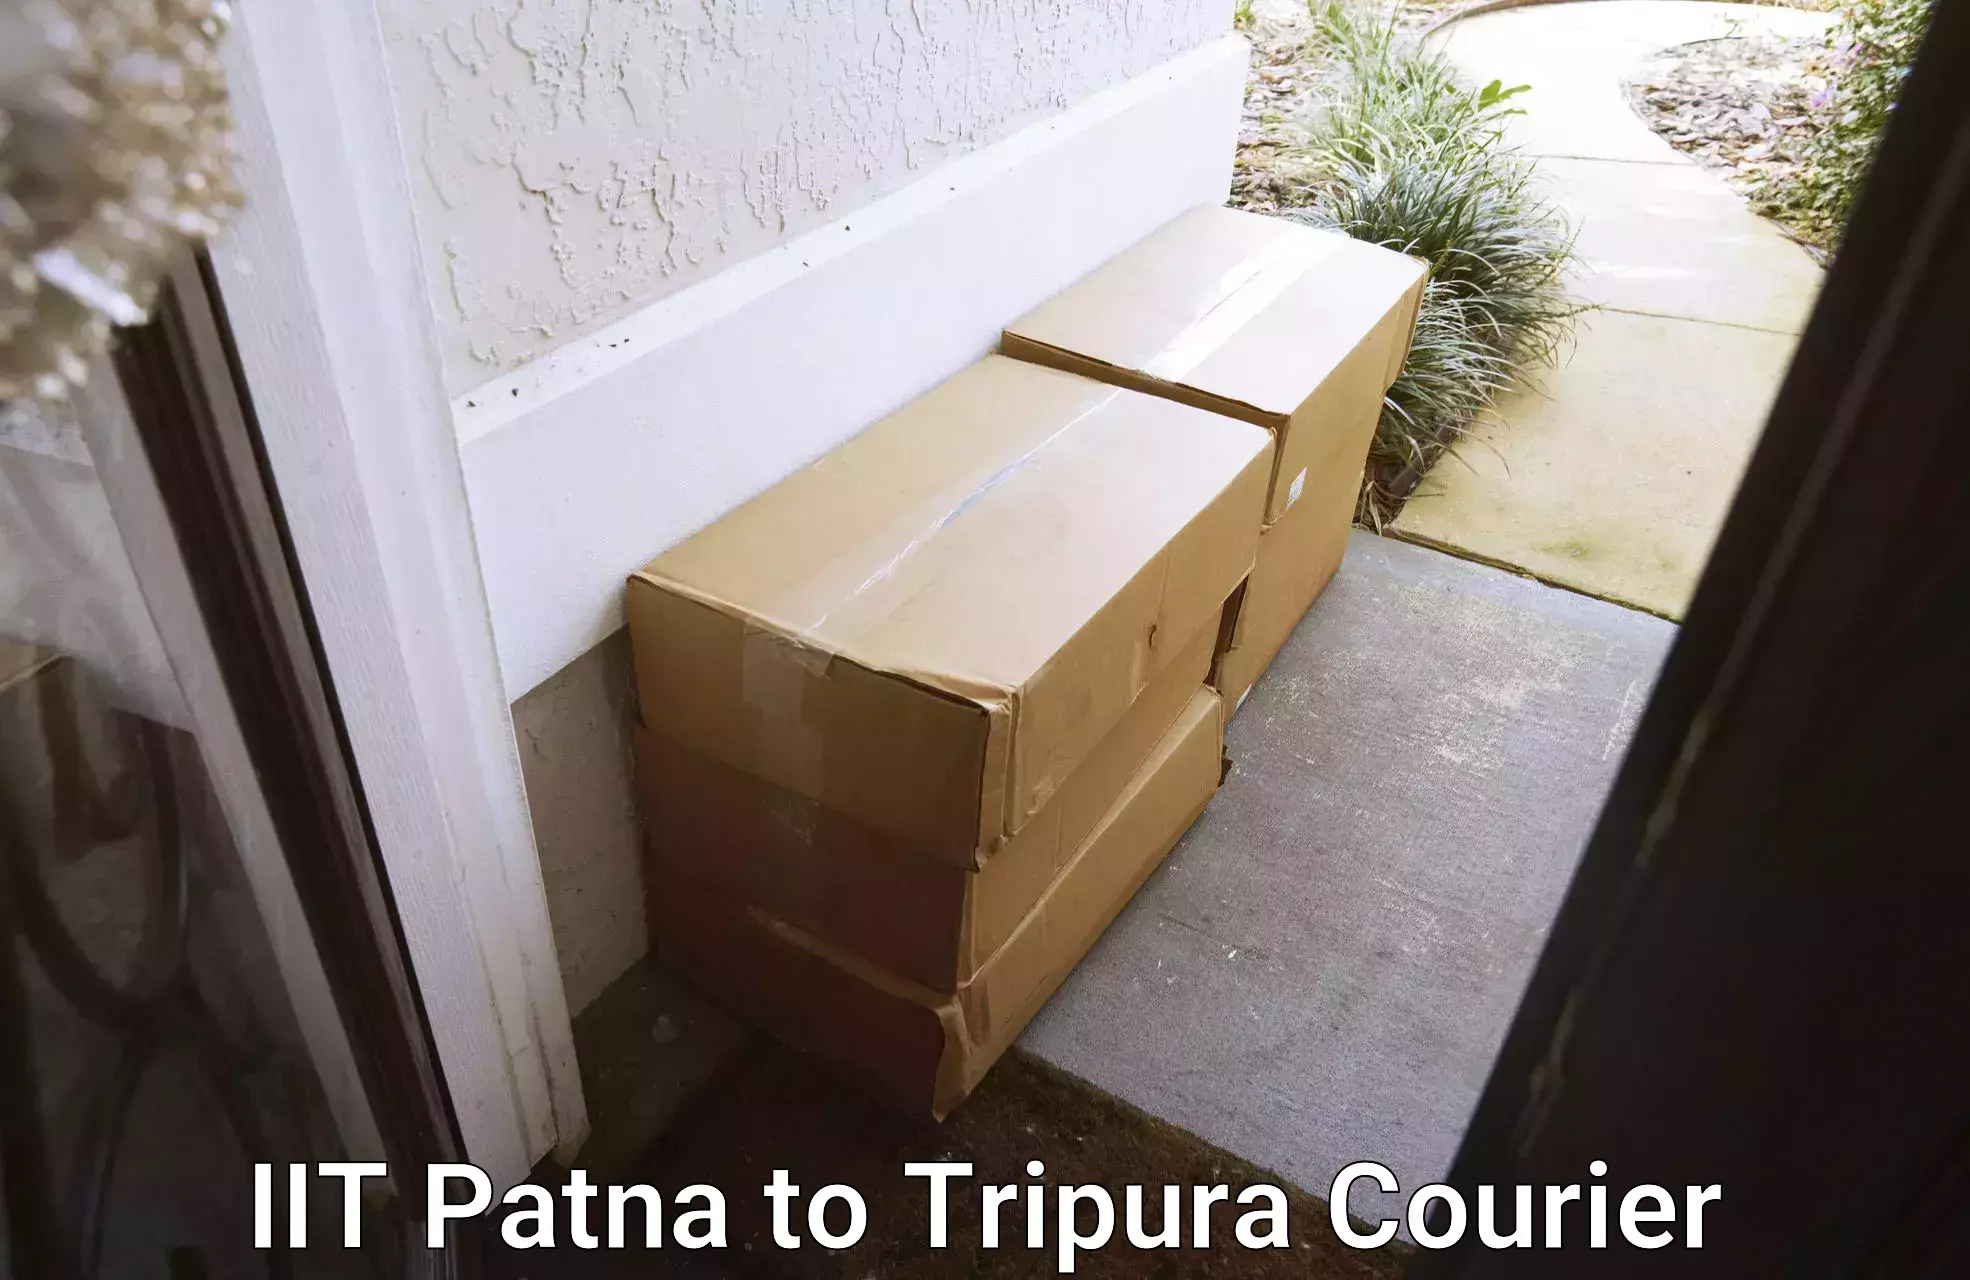 Specialized moving company IIT Patna to Tripura